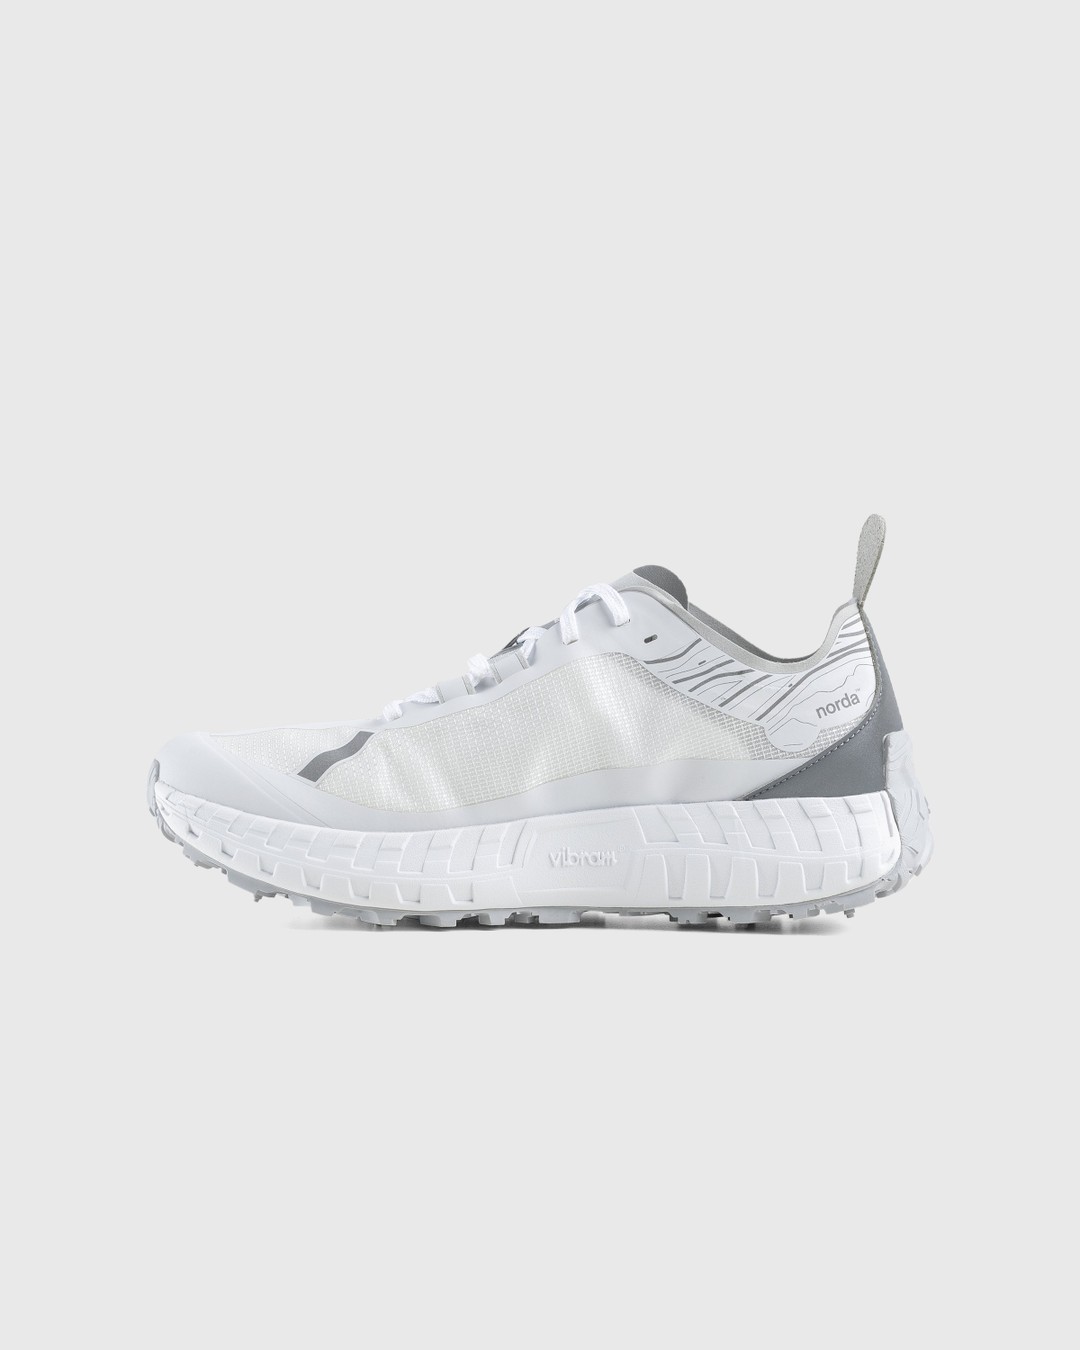 Norda – 001 M White/Grey - Low Top Sneakers - White - Image 2